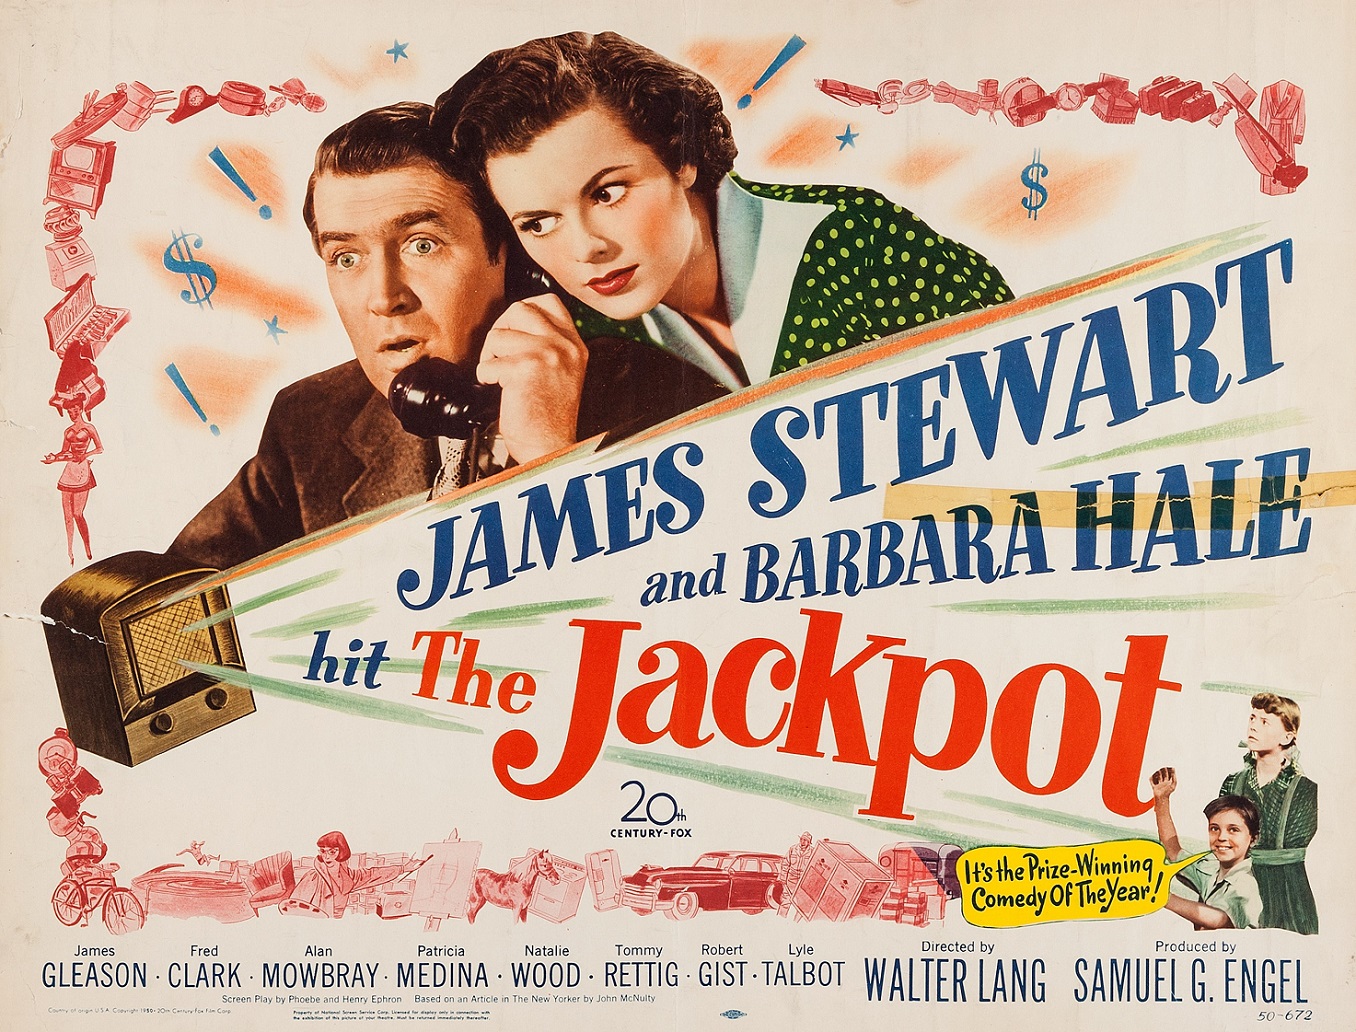 THE JACKPOT (1950) WEB SITE